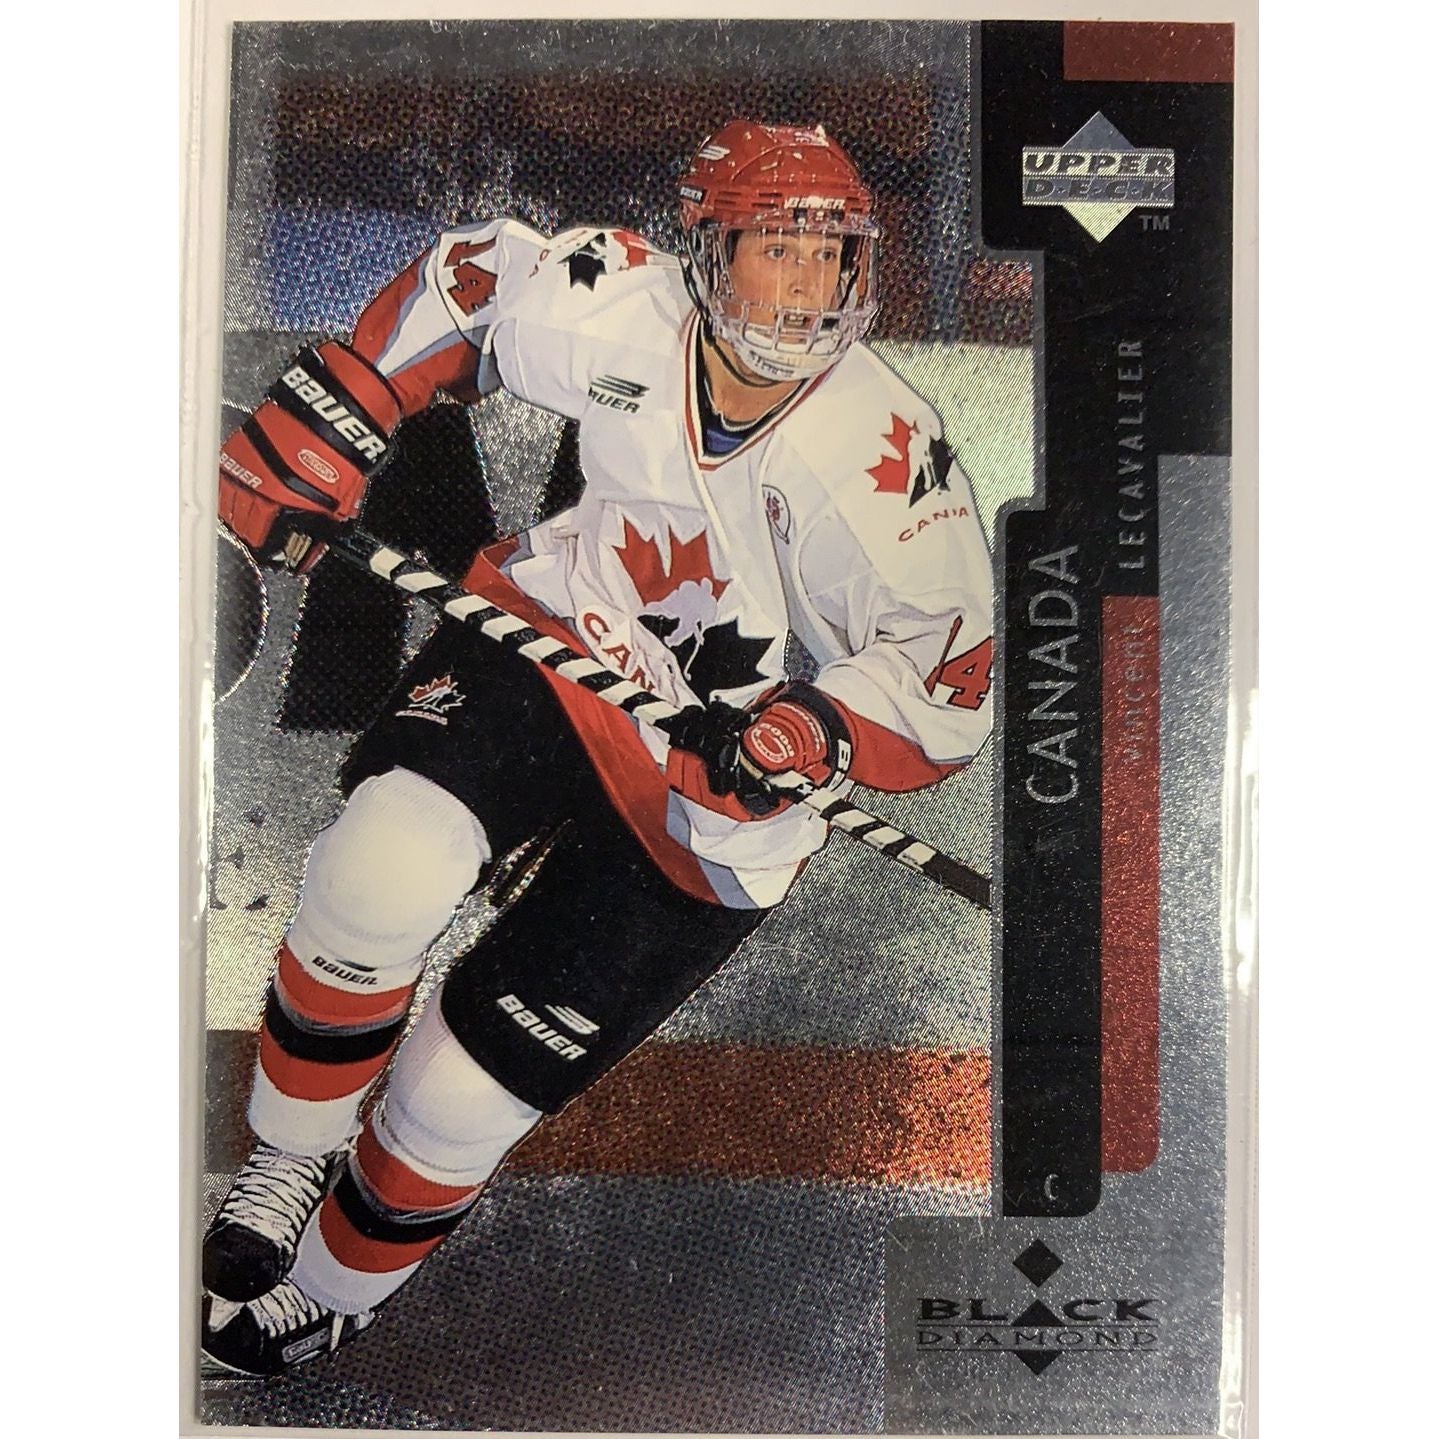  1998 Black Diamond Vincent Lecavalier Team Canada World Juniors RC  Local Legends Cards & Collectibles